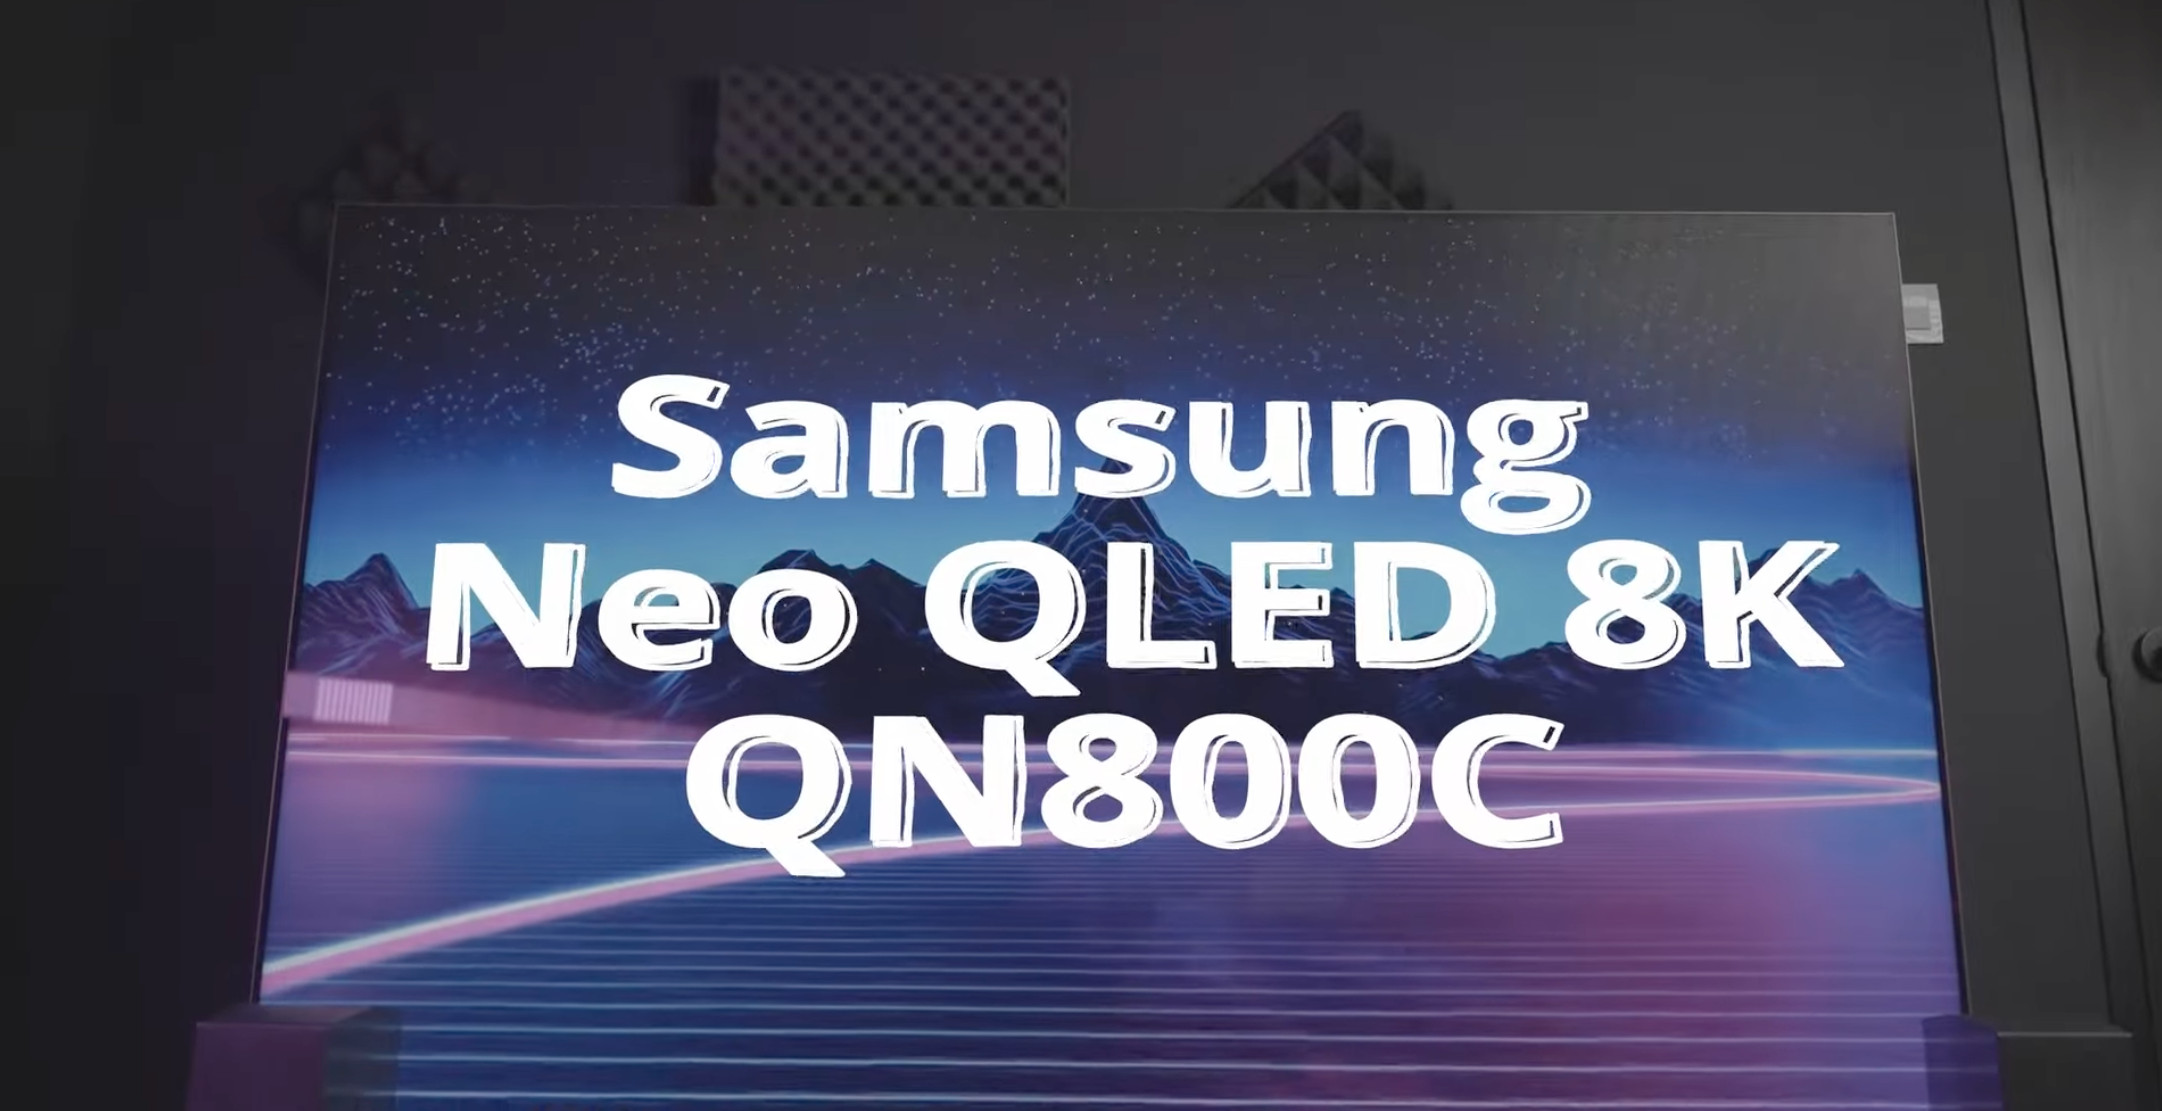 samsung-qn800c-tv-q990c-soundbar-set-review-malaysia